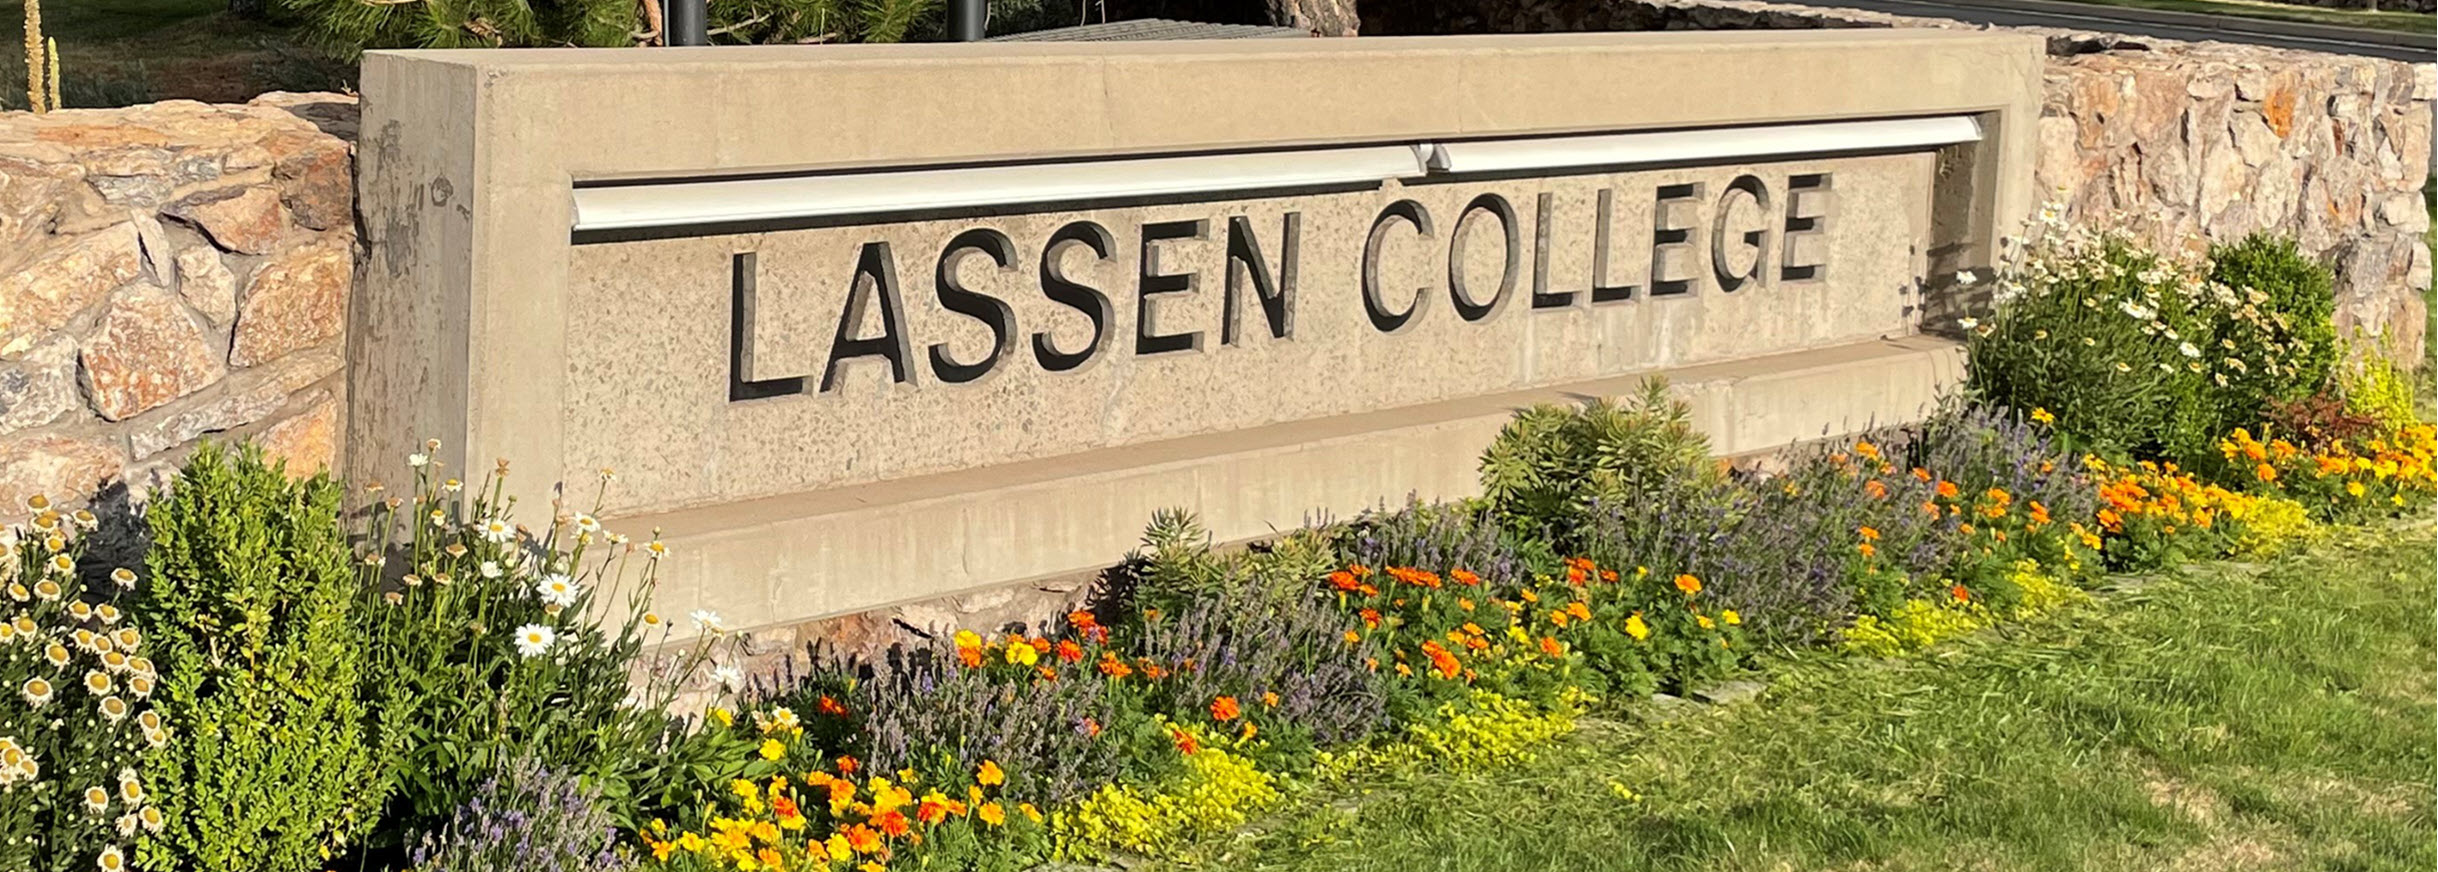 Lassen College Front Sign